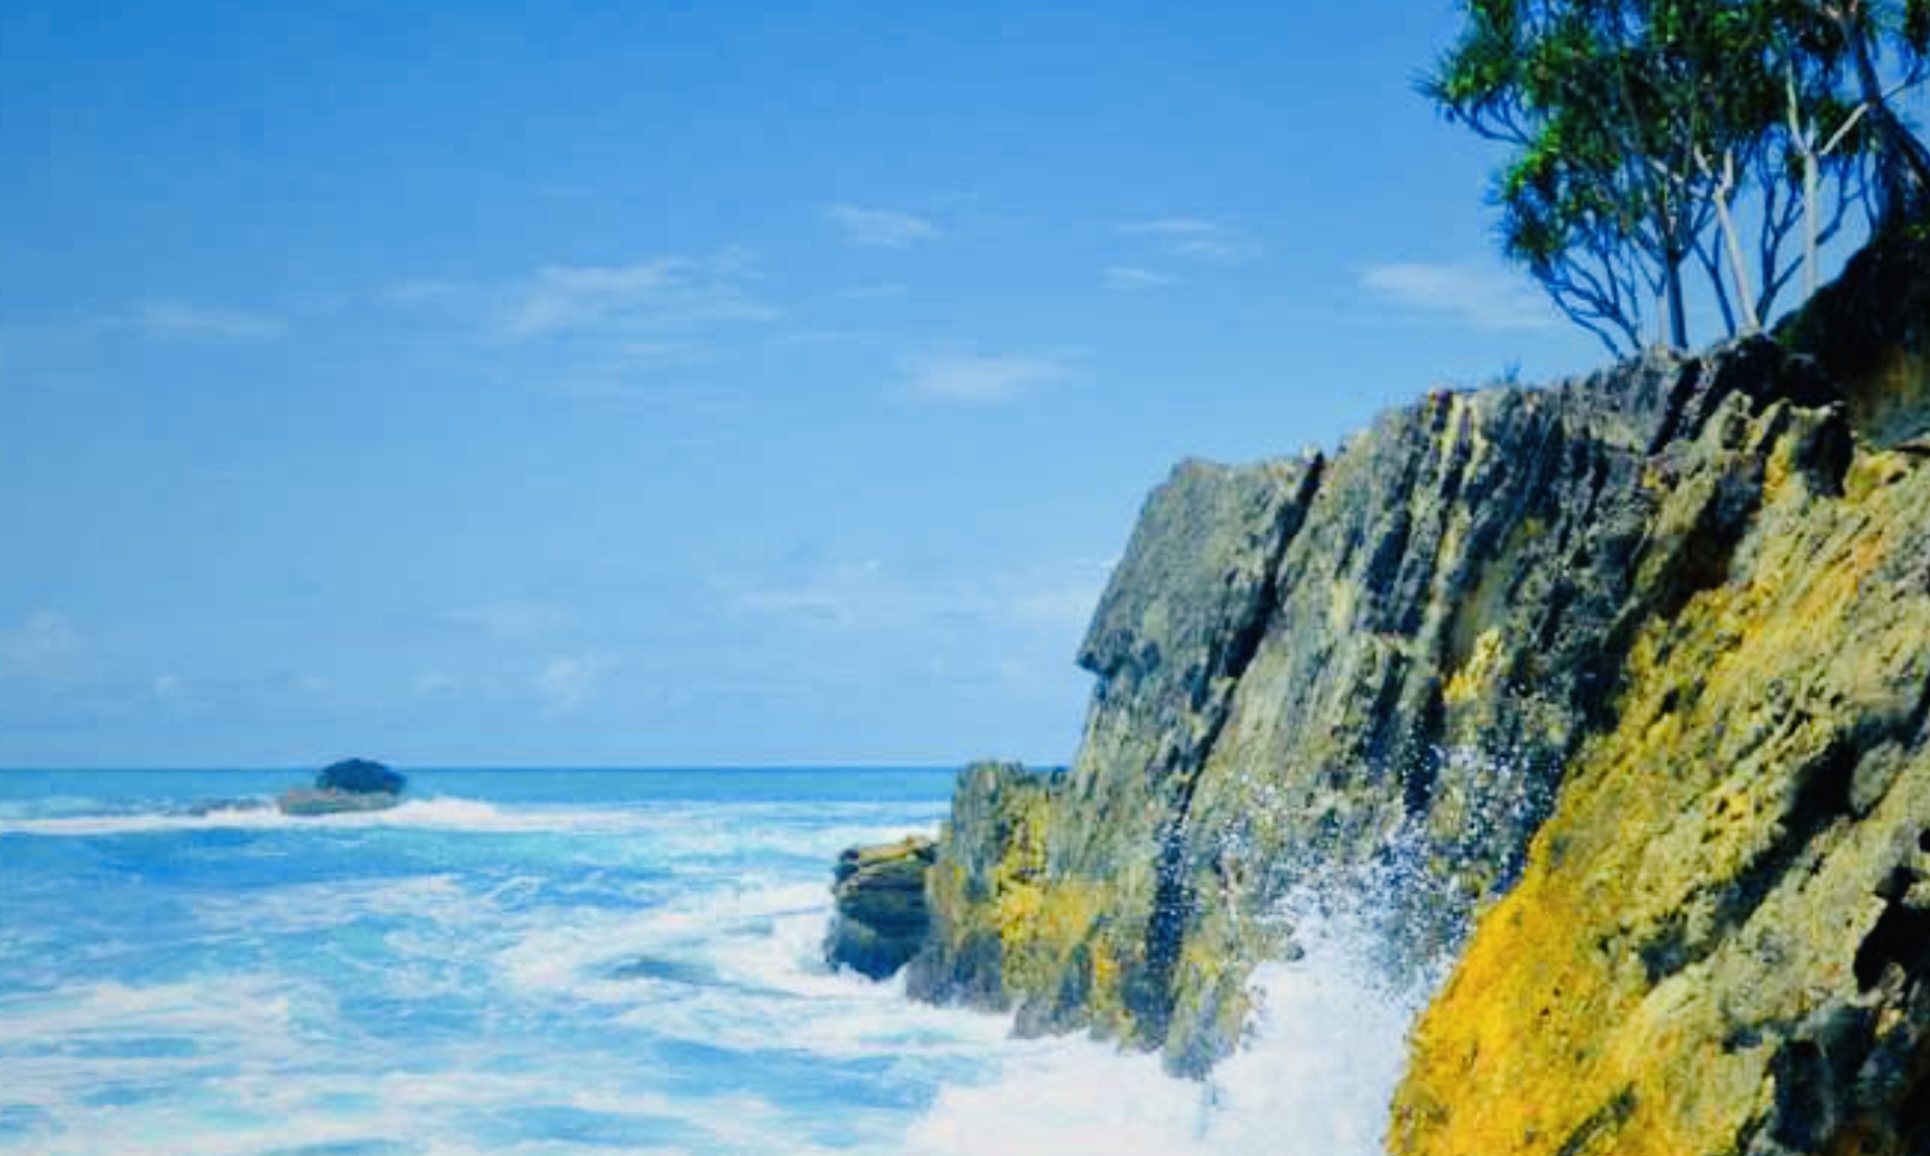 Sejarah Batu Hiu Wisata Alam di Pantai Pangandaran, Disebut Sebagai “Tanah Lot” nya Jawa Barat